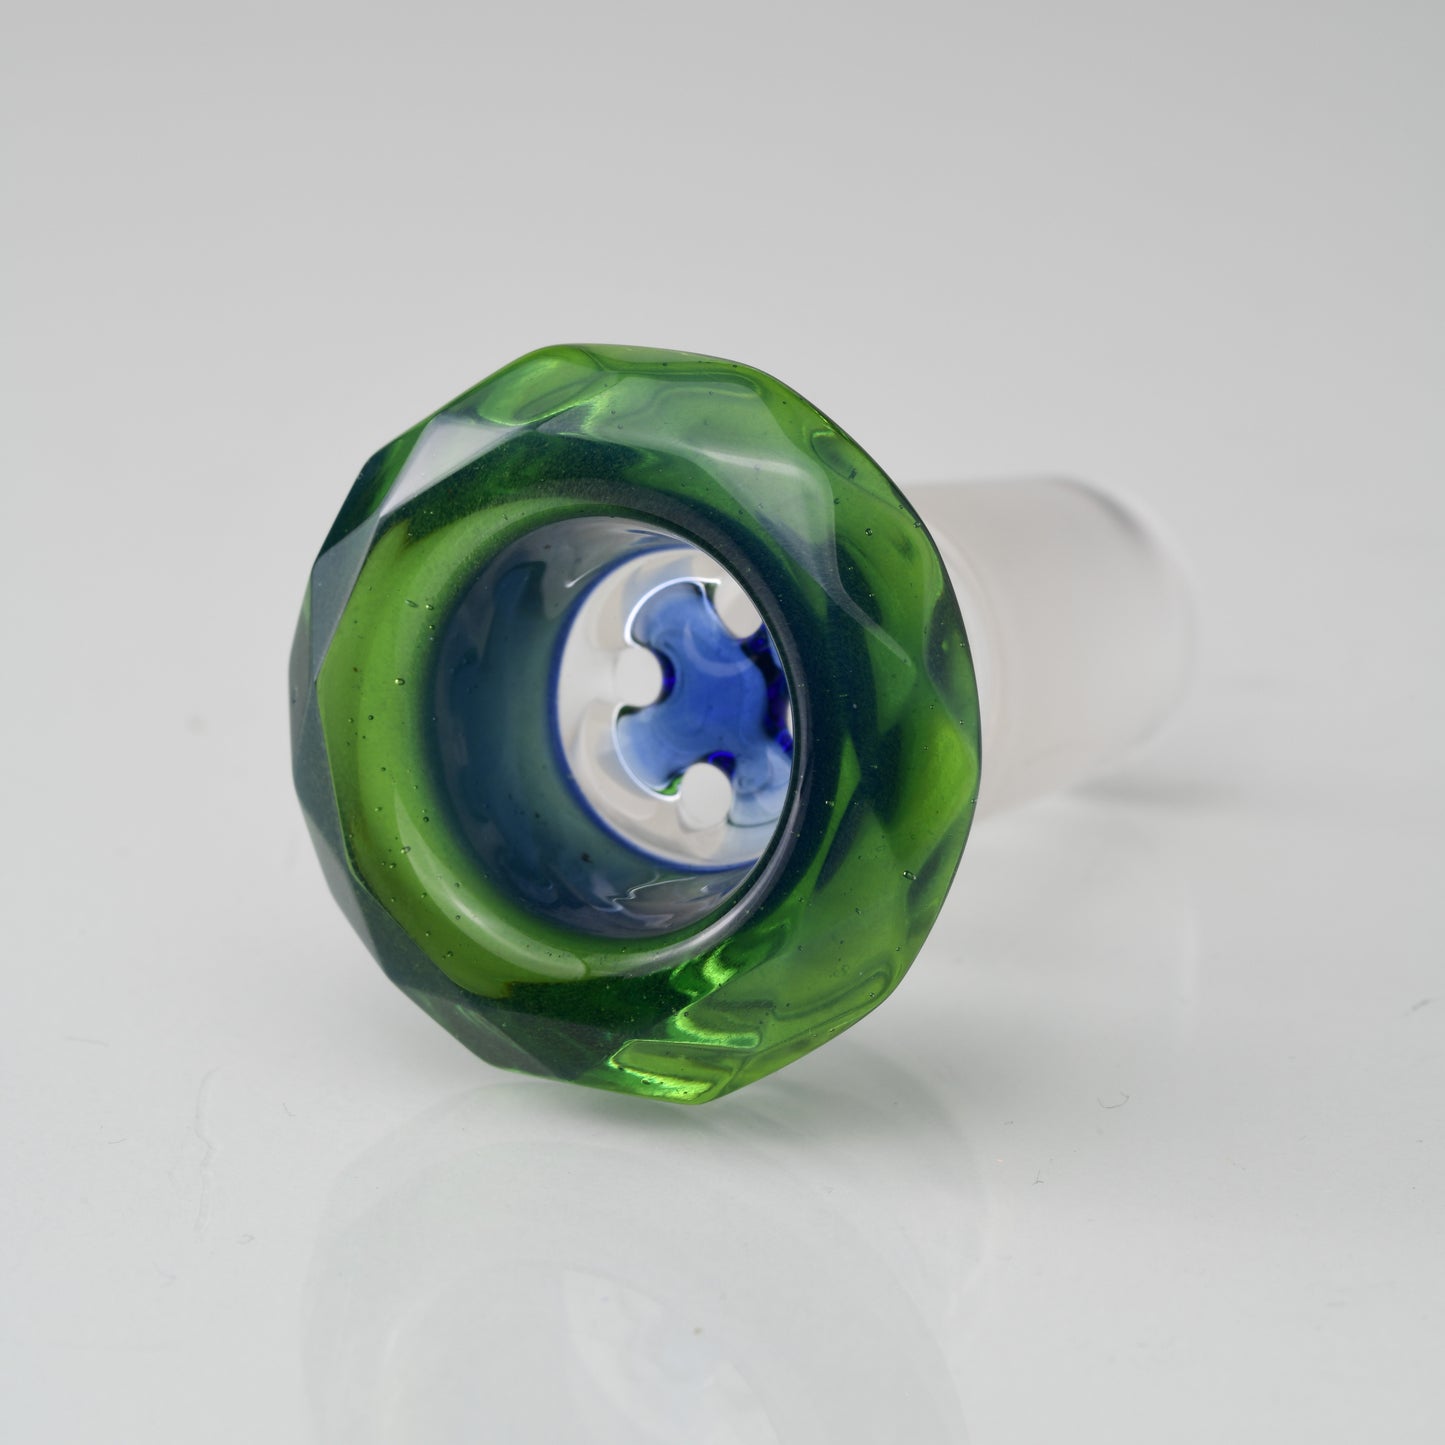 Apix Designs - 18mm 4 Hole Faceted Green Over Blue Satin Slide